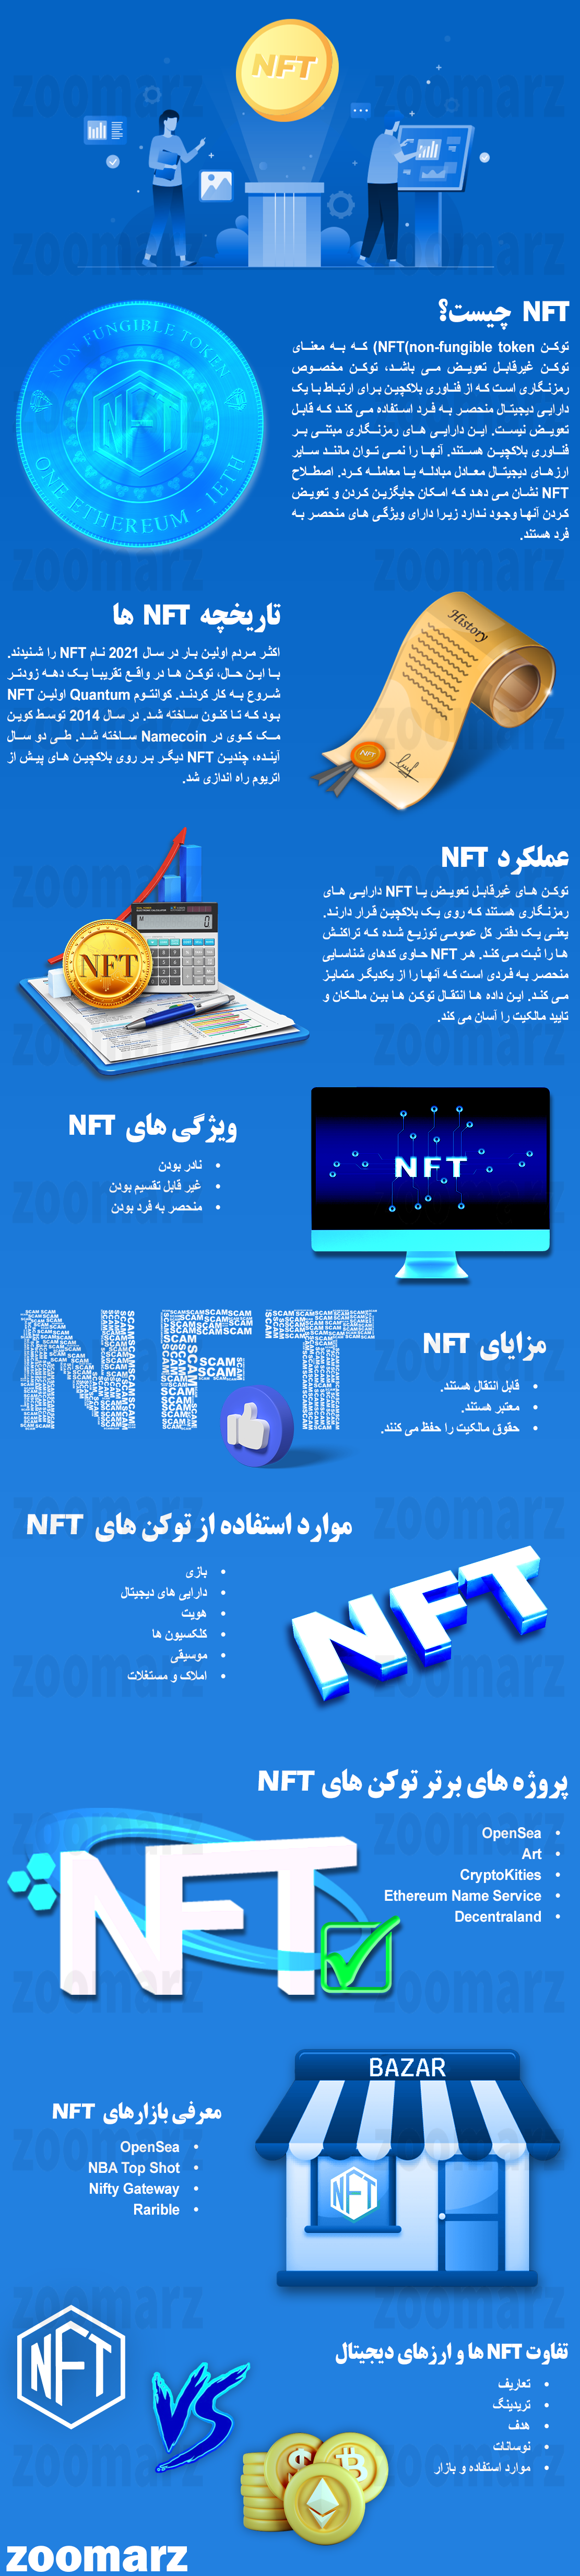 اینفوگرافیک NFT چیست؟